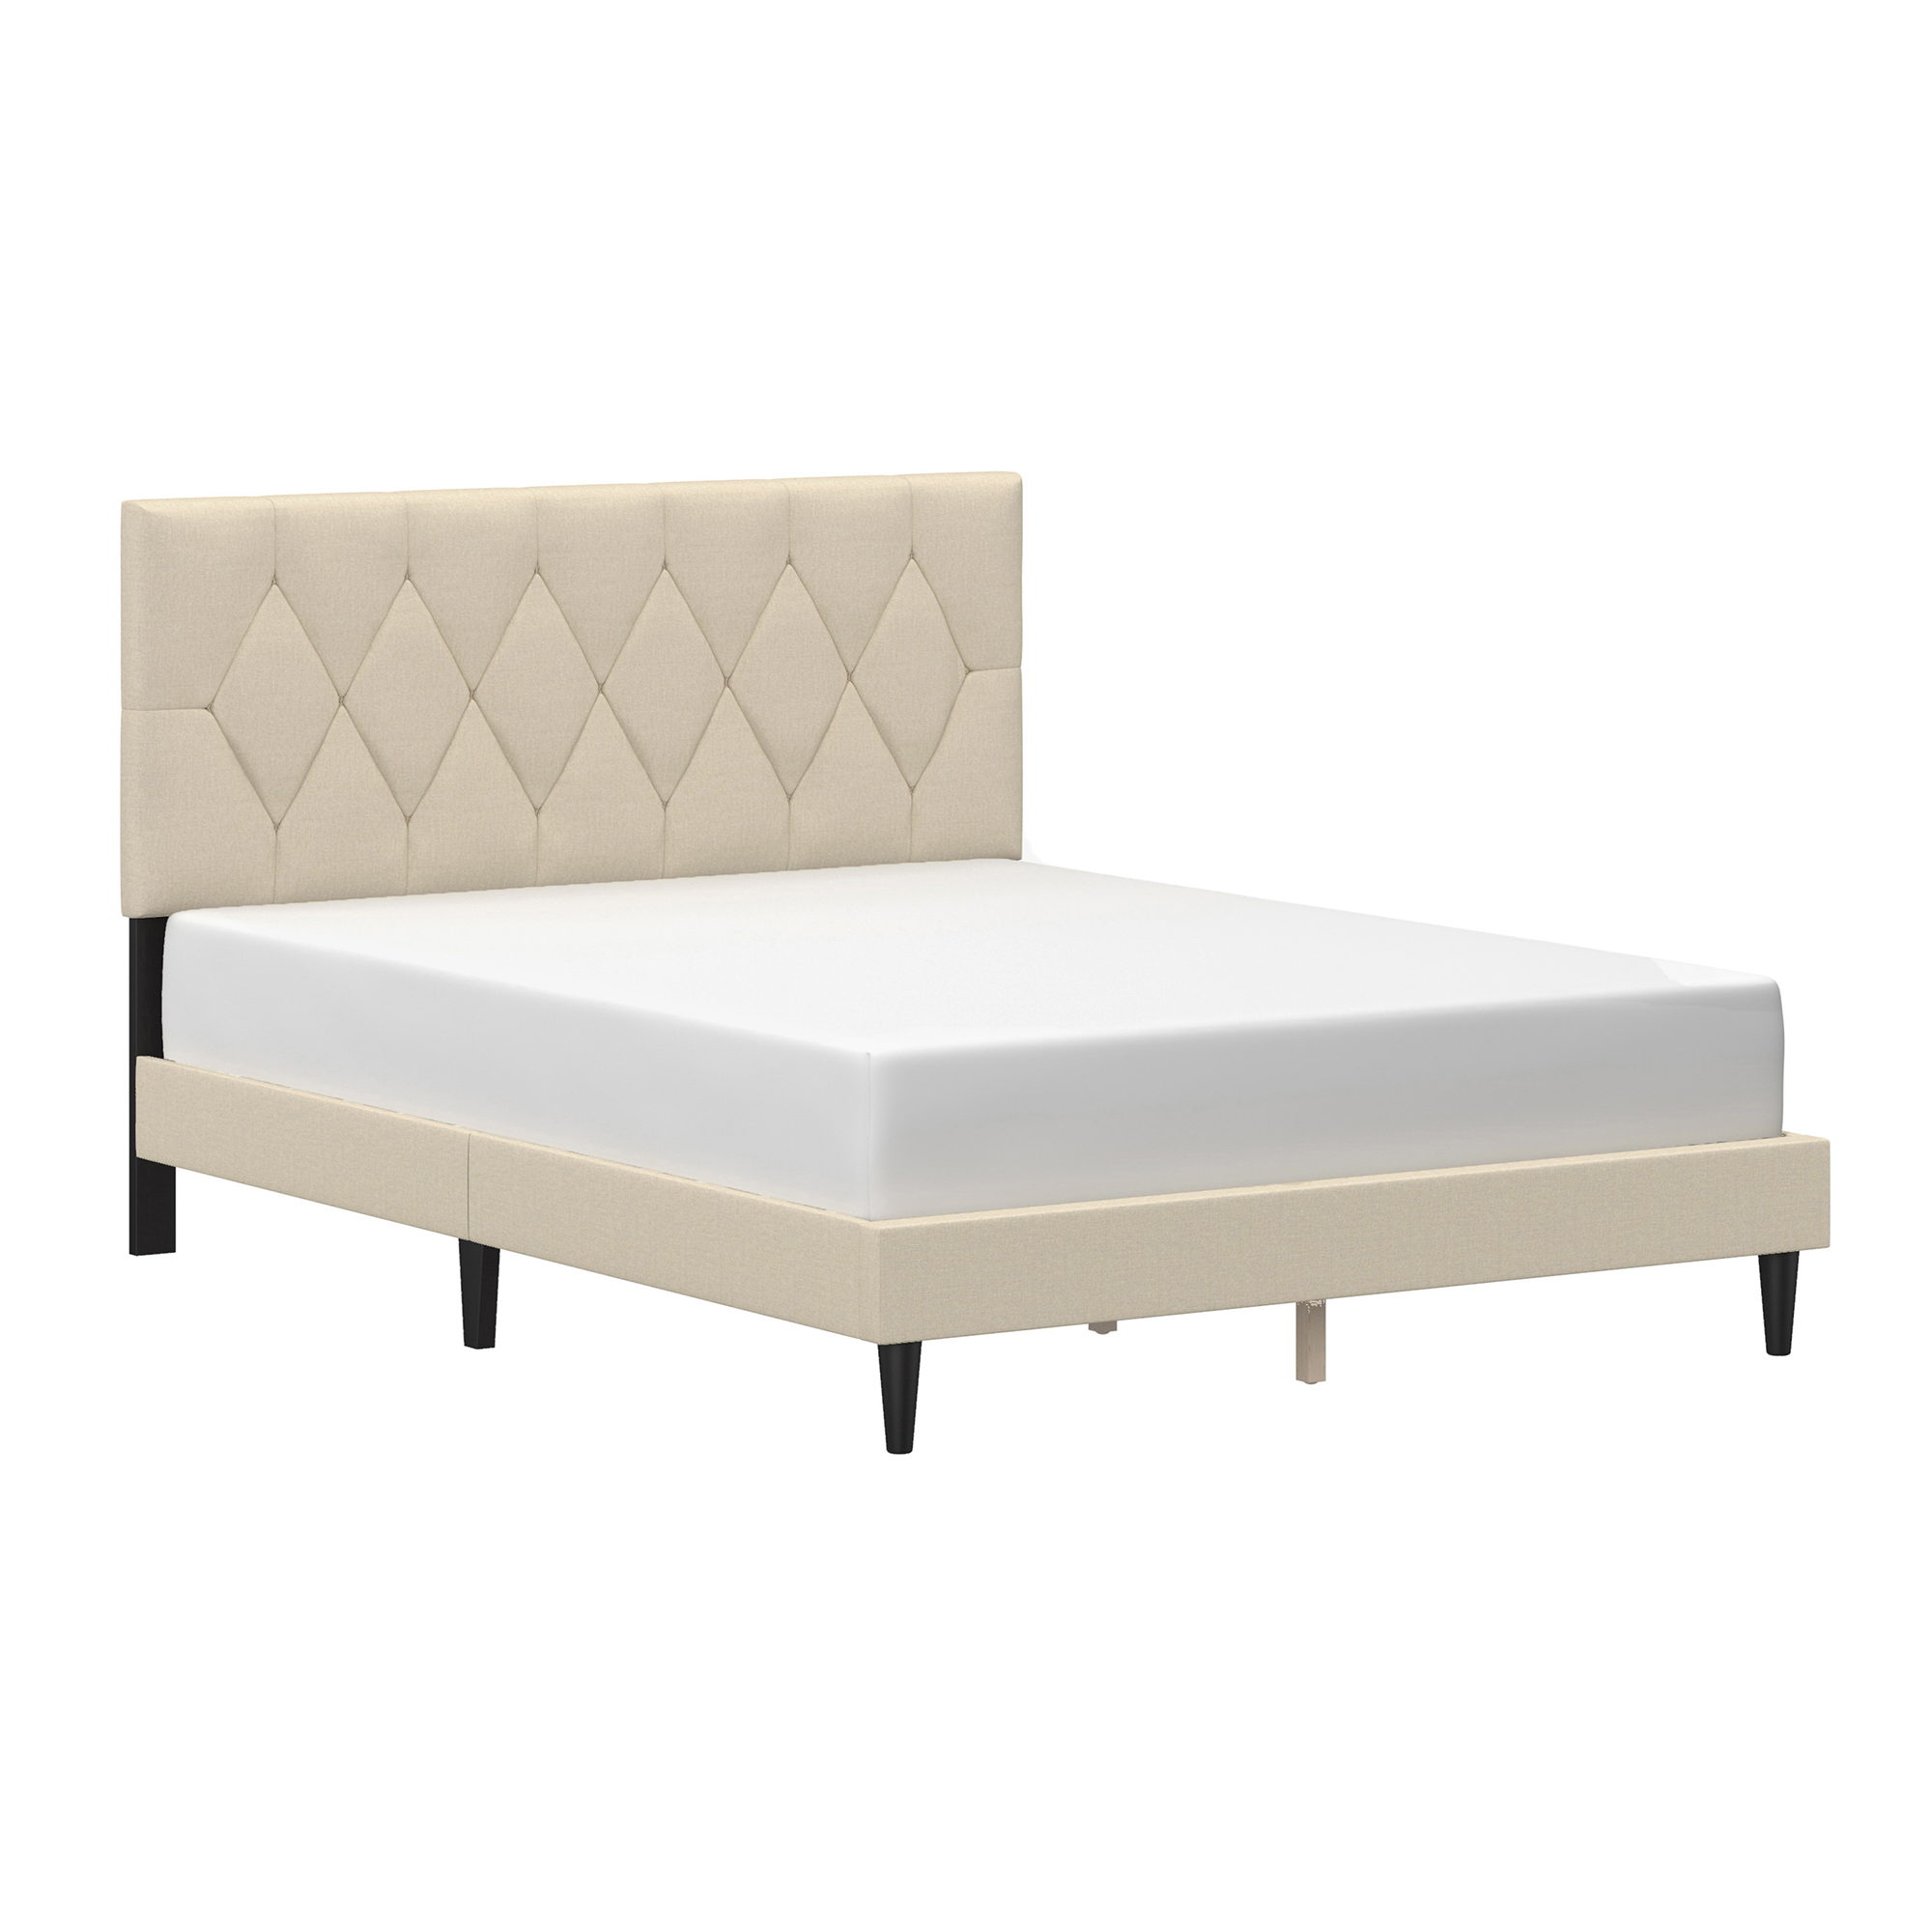 Mainstays Hillside Diamond Tufted Upholstered Queen Platform Bed, Ivory - image 4 of 17